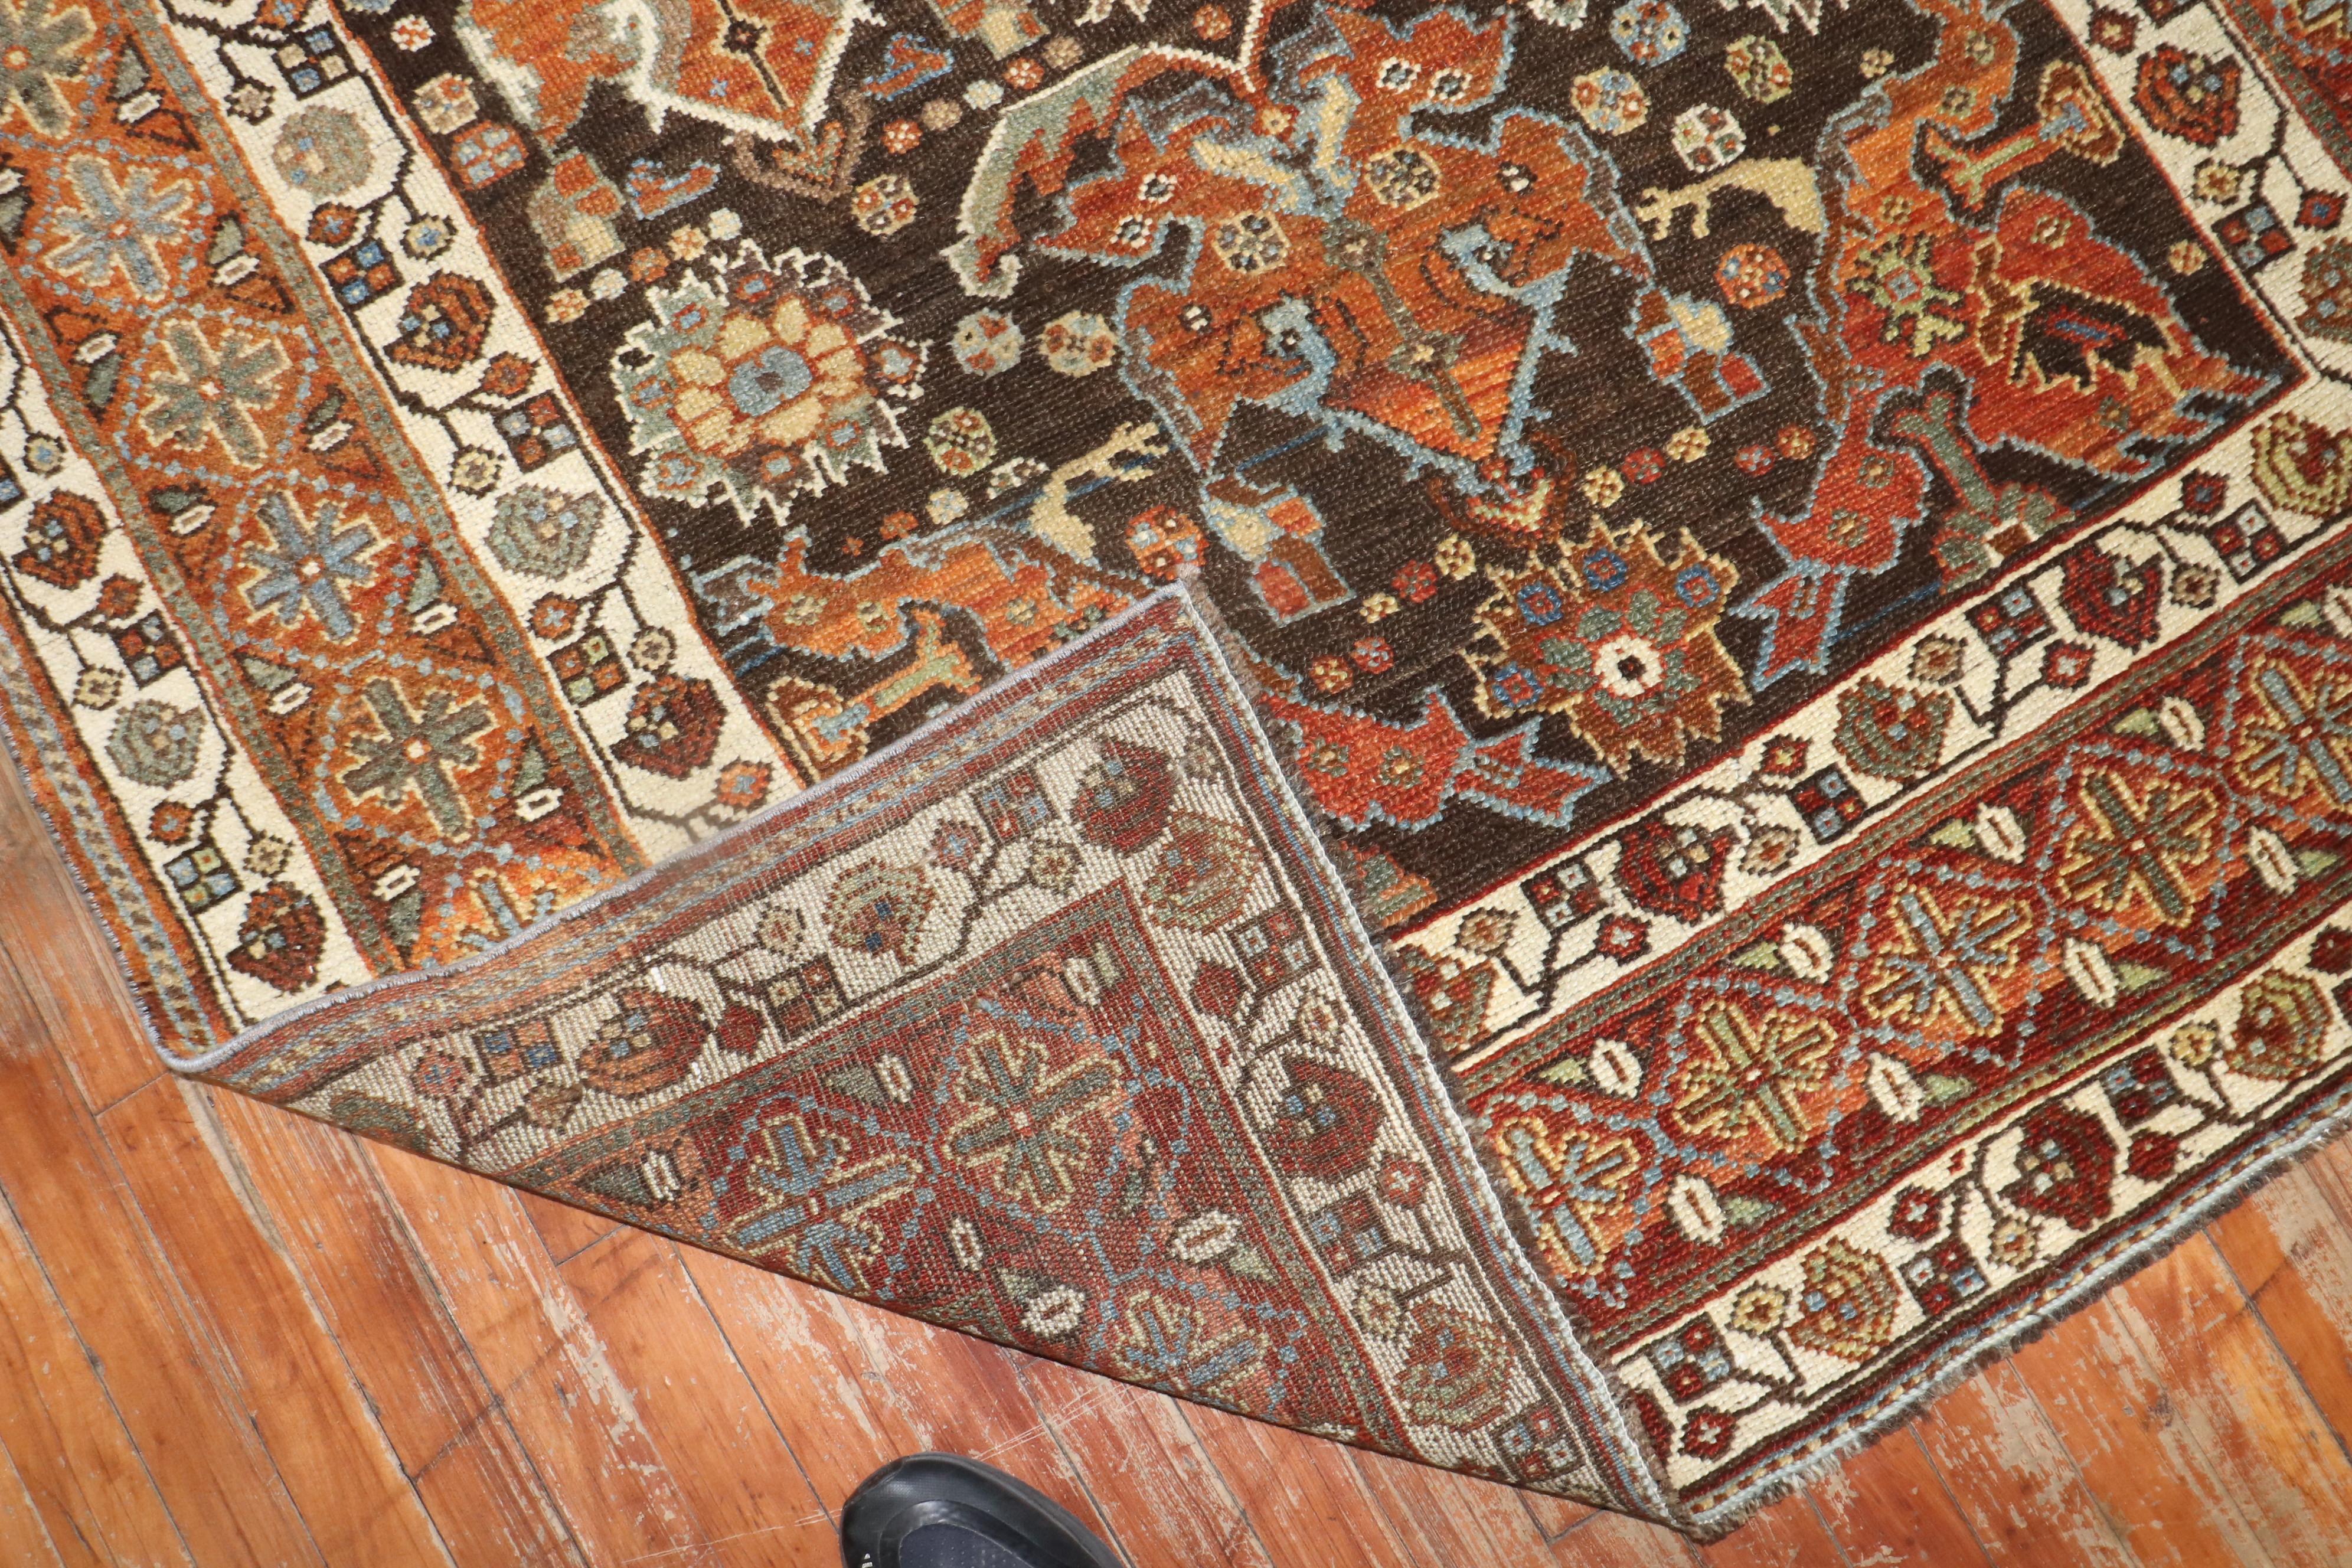 1930s Persian Tribal Kurd rug in predominant brown tones

Measures: 4'9'' x 9'10'''.